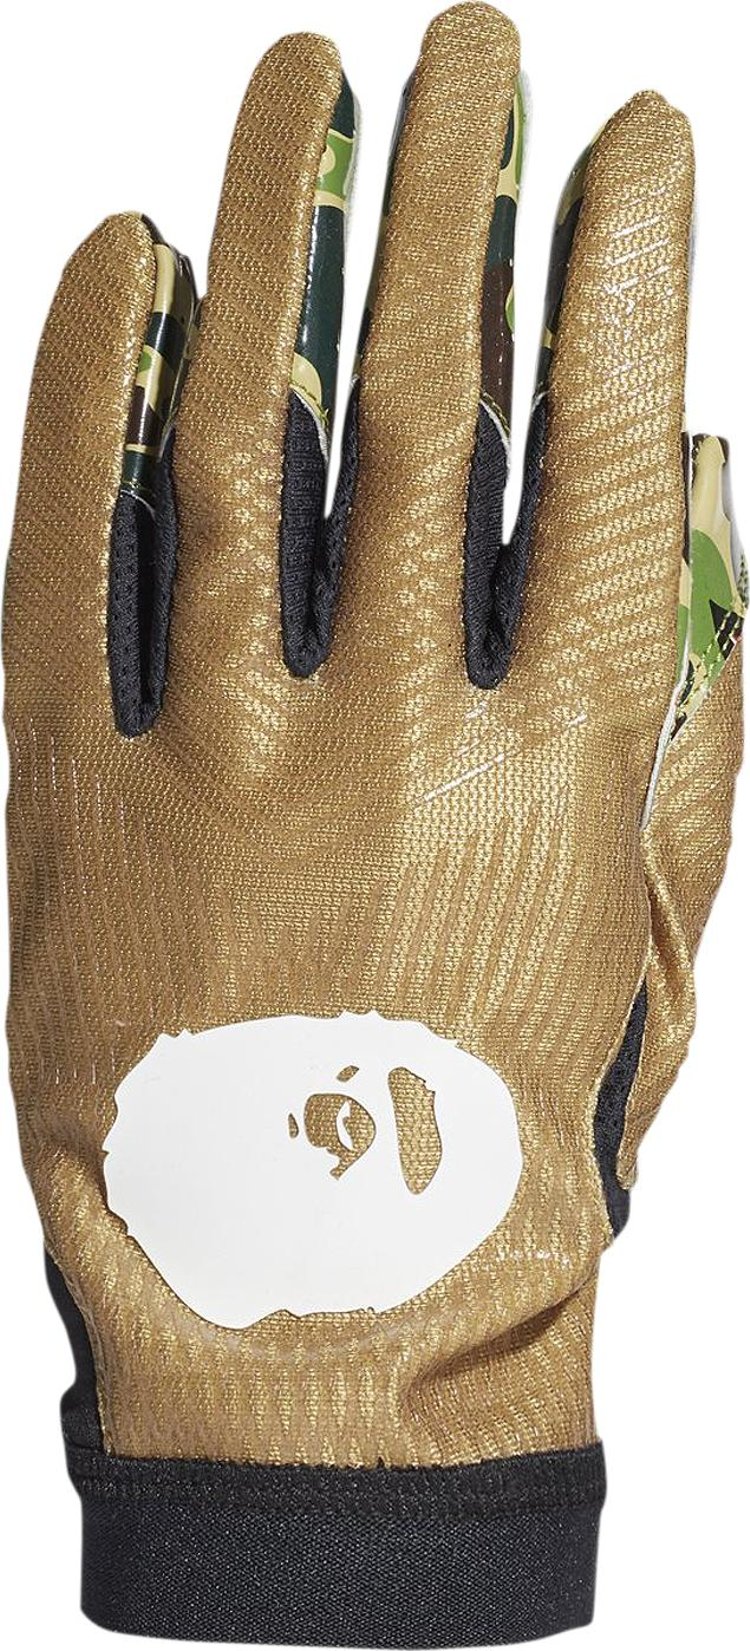 BAPE x adidas Adizero 8.0 Gloves 'Green'